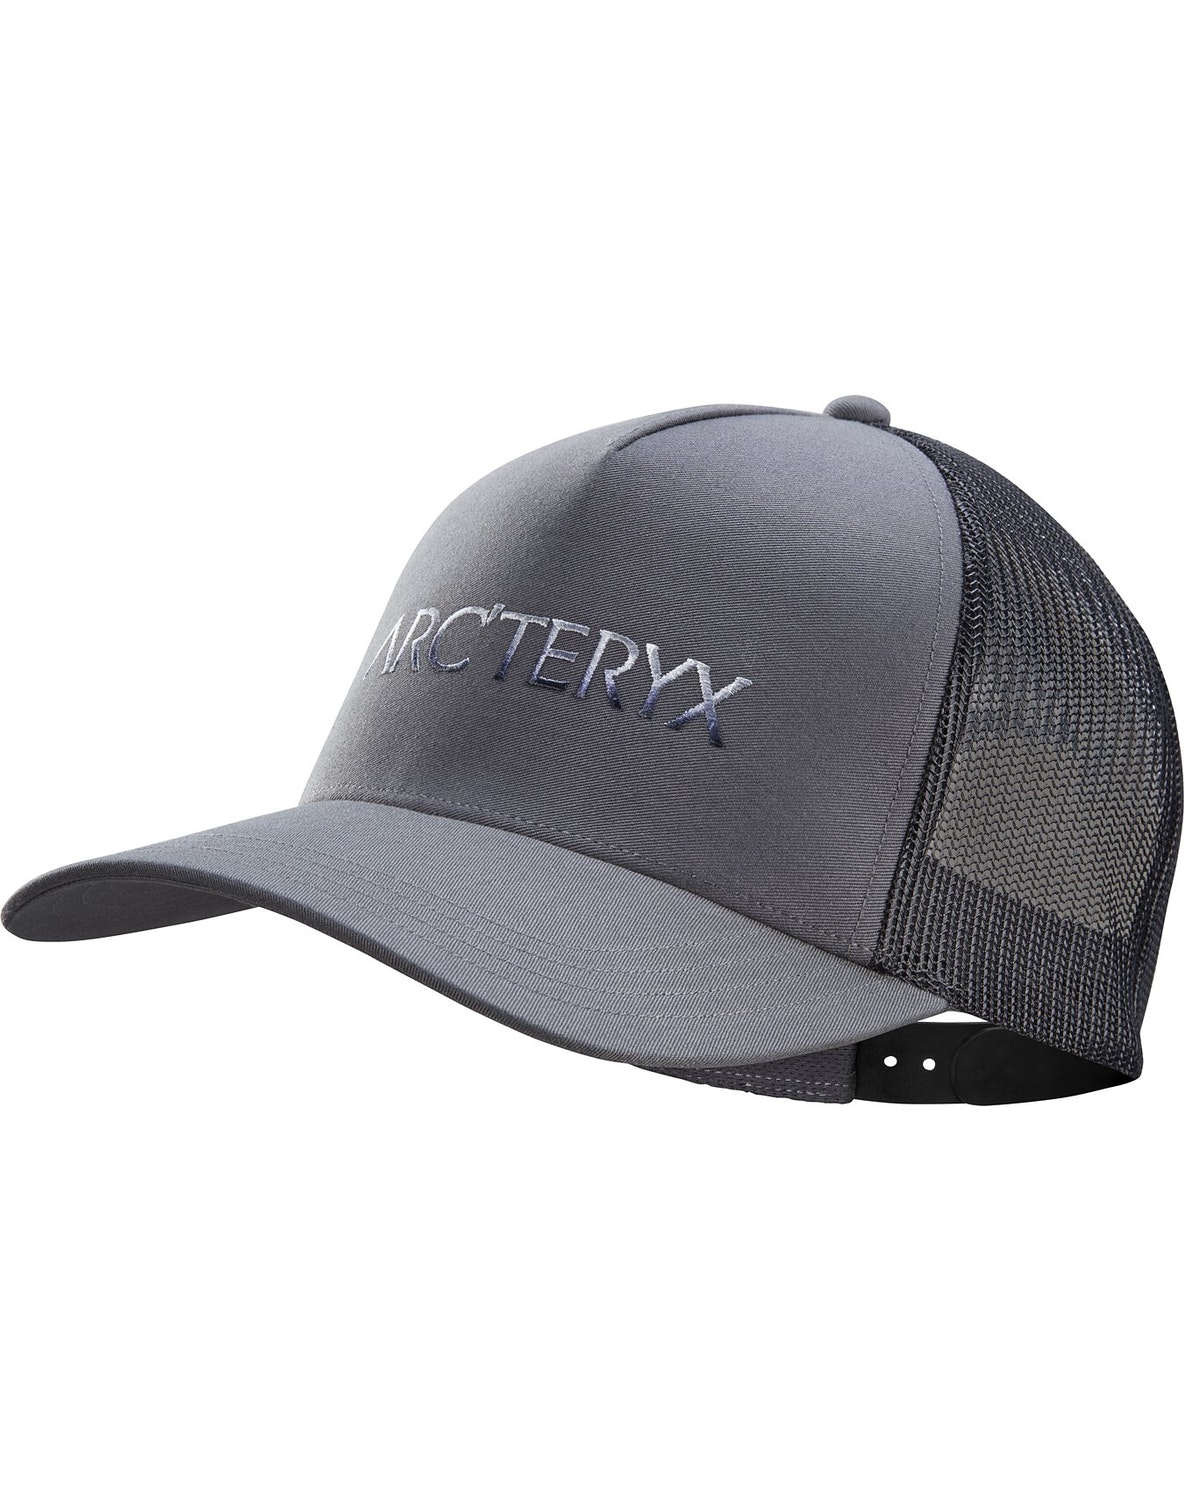 Hats Arc'teryx Polychrome Curved Brim Donna Grigie/Nere - IT-3769875